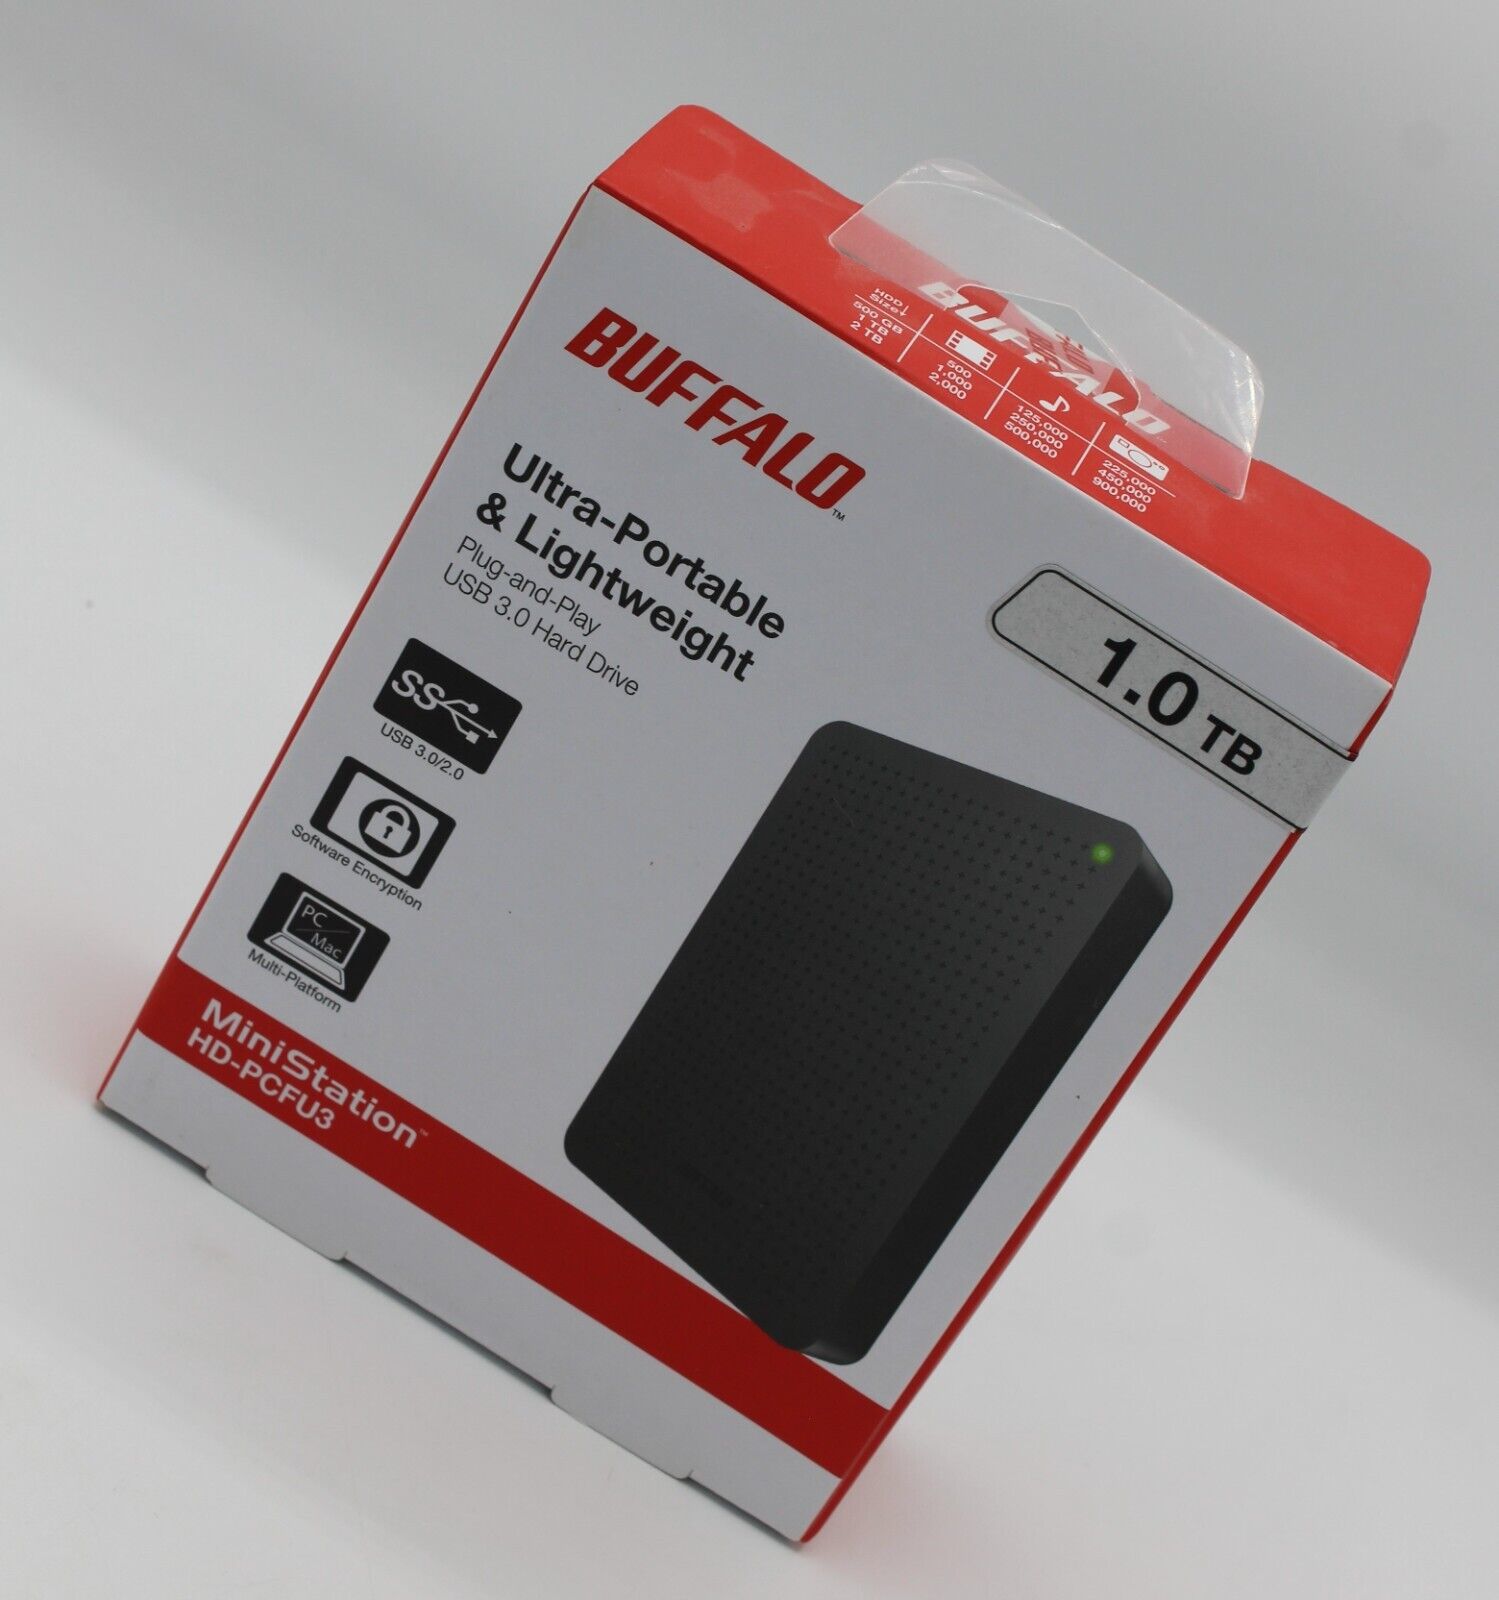 NEW Buffalo Mini Station HD-PCFU3 Plug & Play USB 3.0 Hard Drive 1.0 TB Sealed